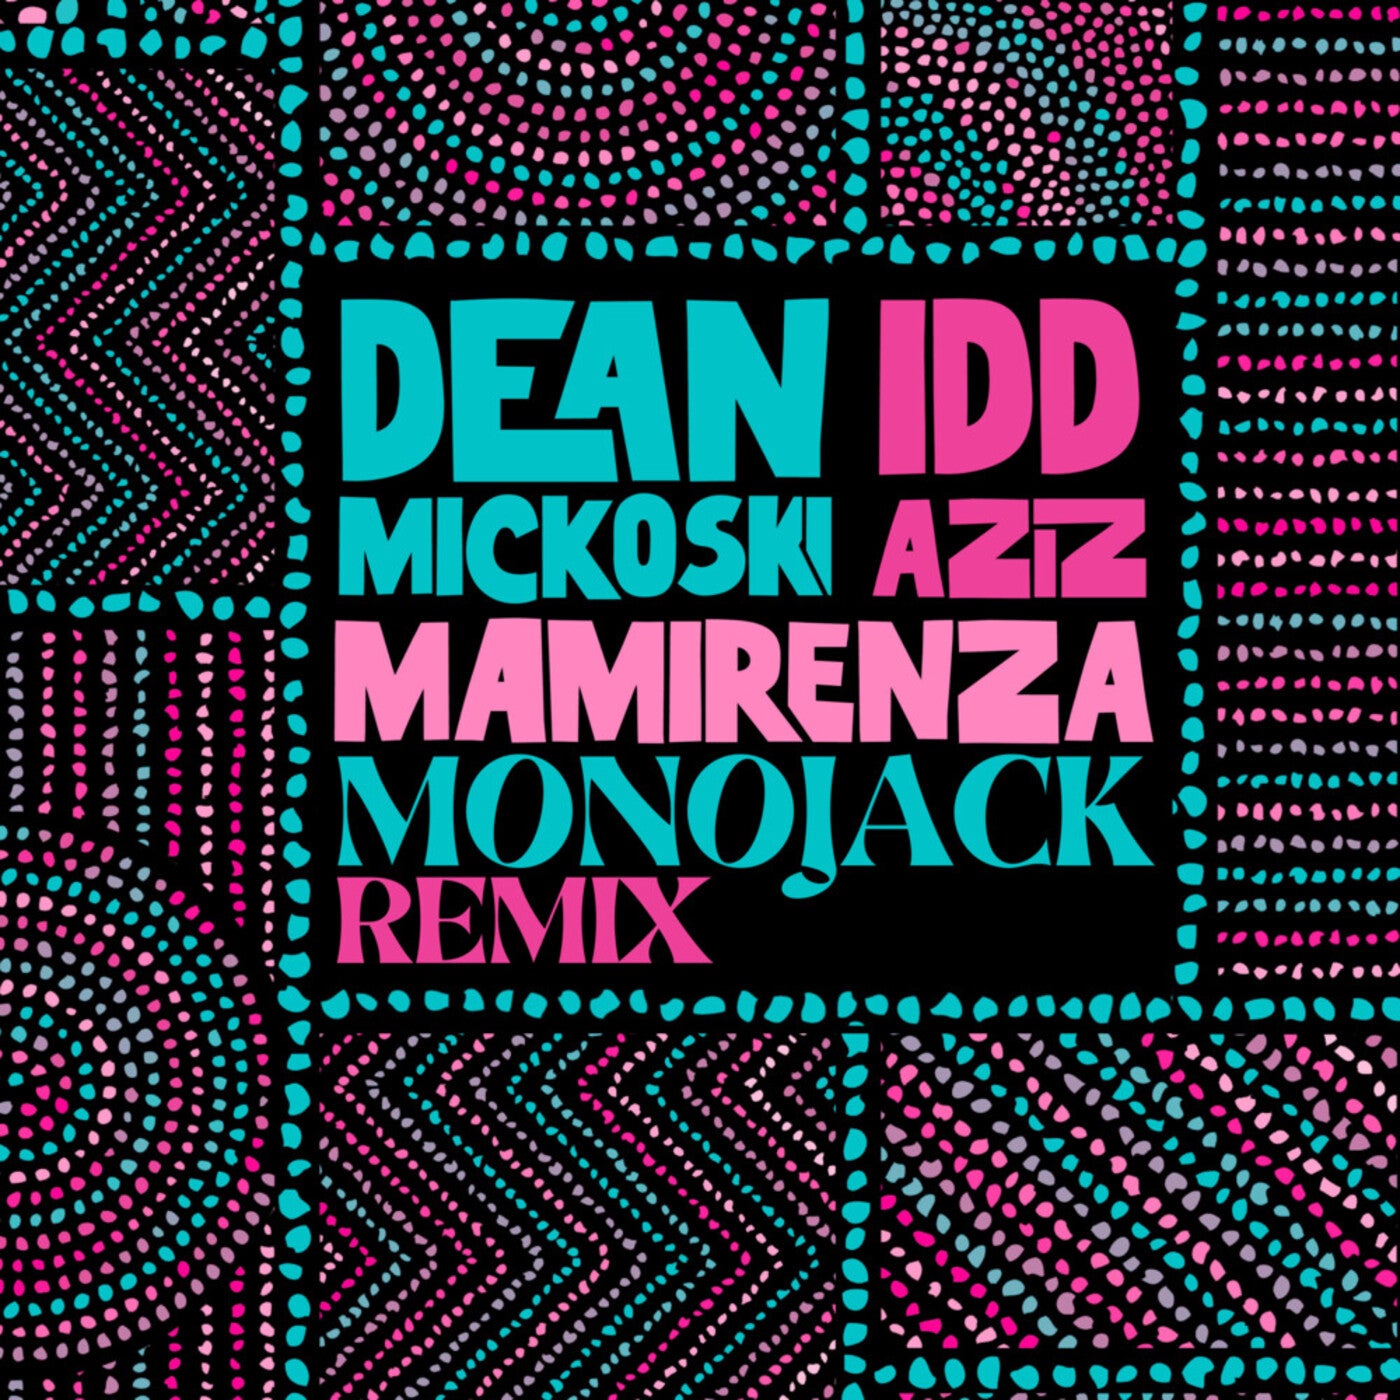 MaMirenza (MonoJack Remix)